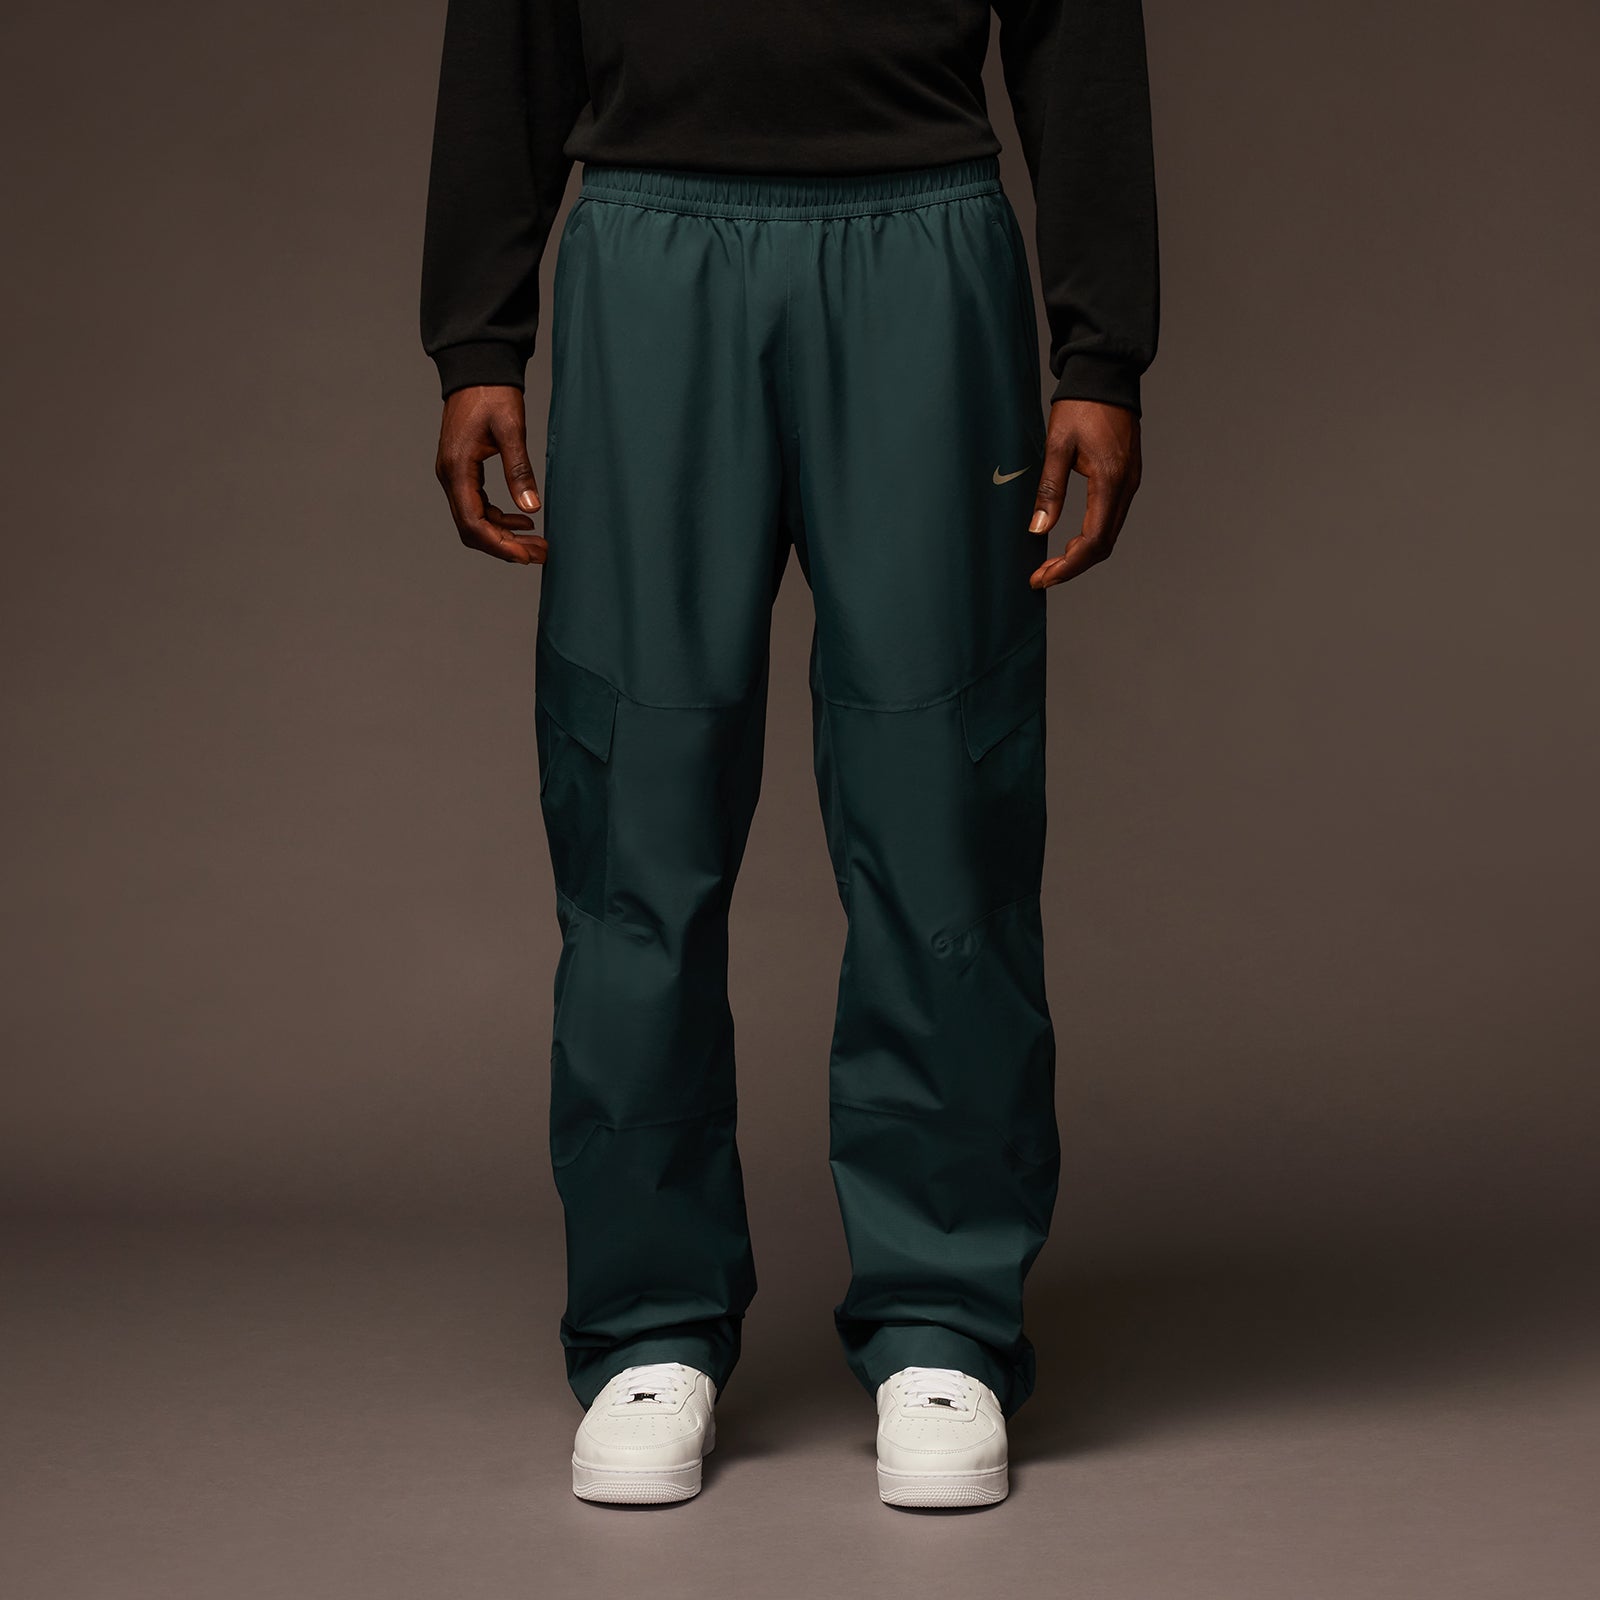 Nike Womens XL Track Pants Black Mesh Lined Size 16 Nepal